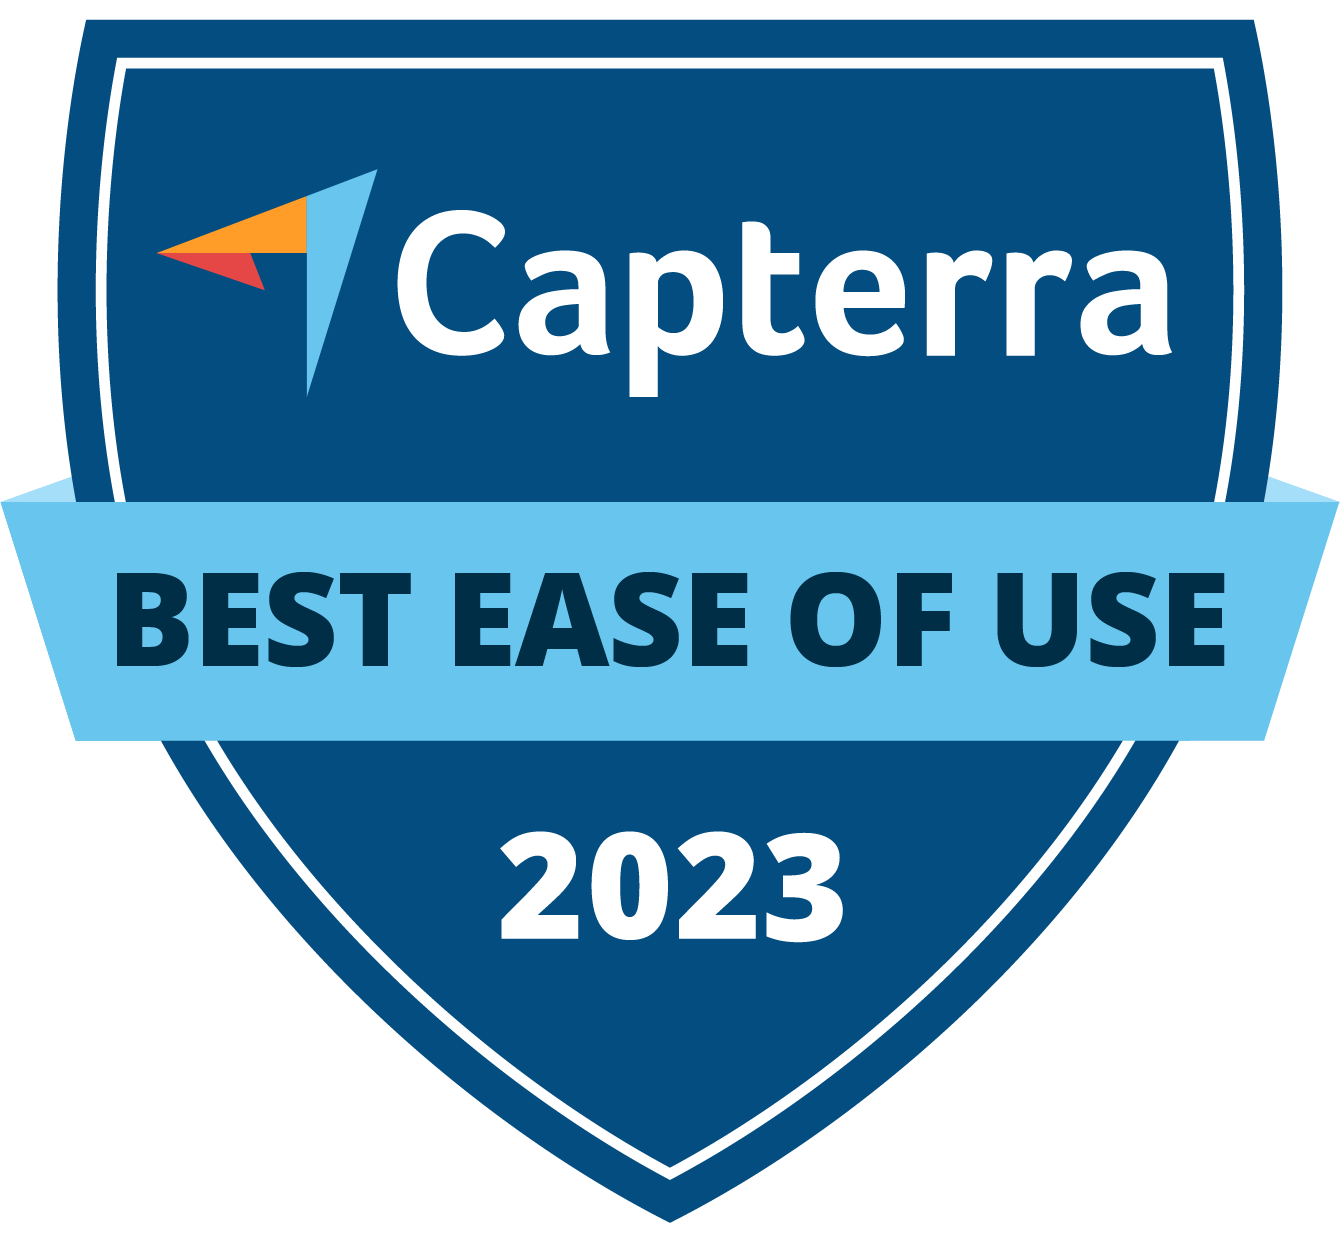 "Capterra 2023